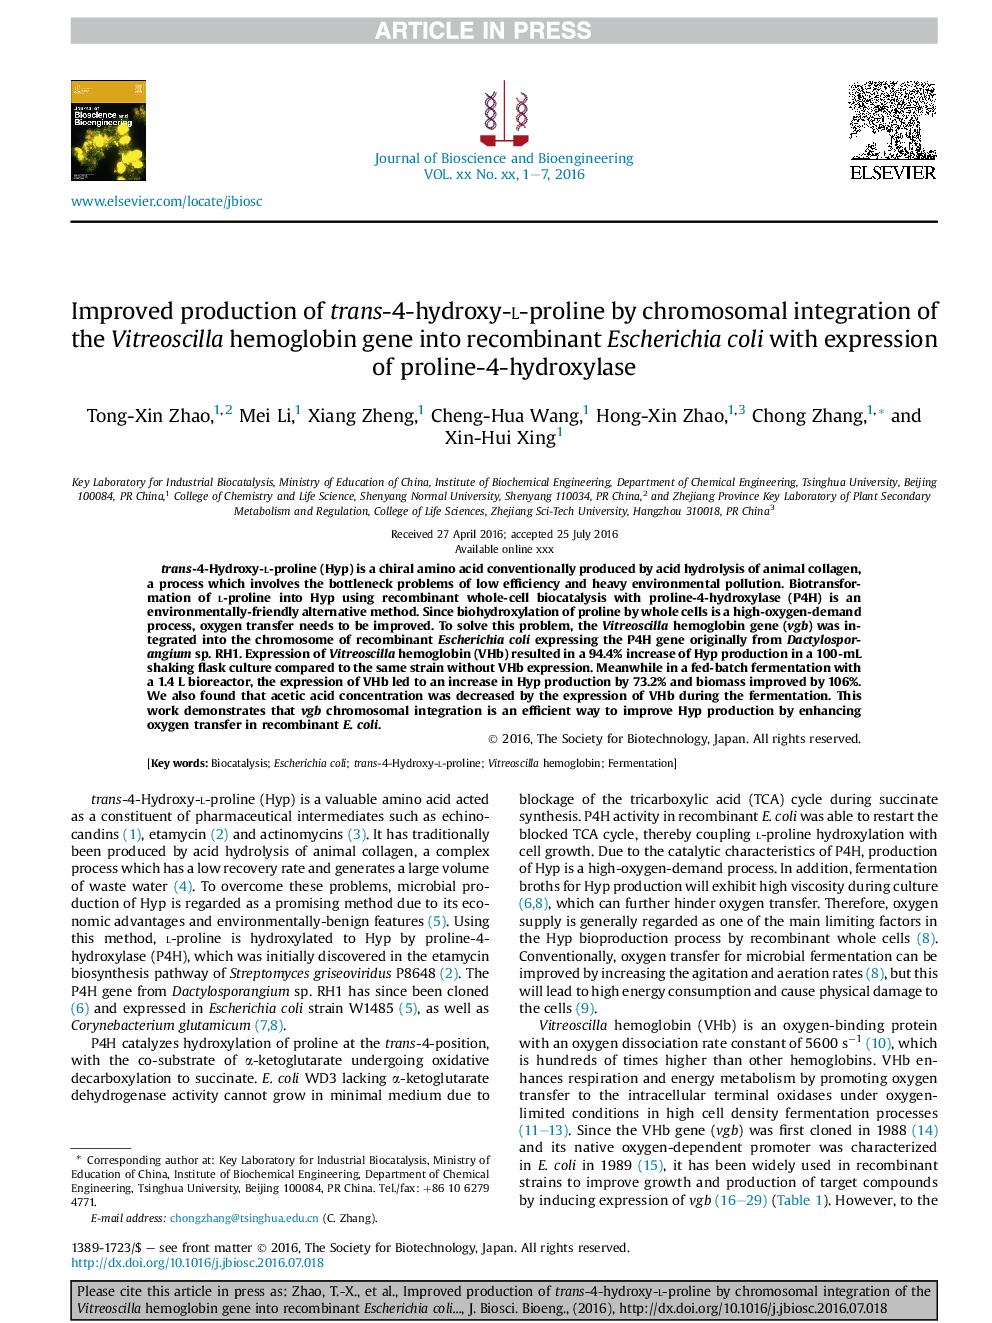 Improved production of trans-4-hydroxy-l-proline by chromosomal integration of the Vitreoscilla hemoglobin gene into recombinant Escherichia coli with expression of proline-4-hydroxylase